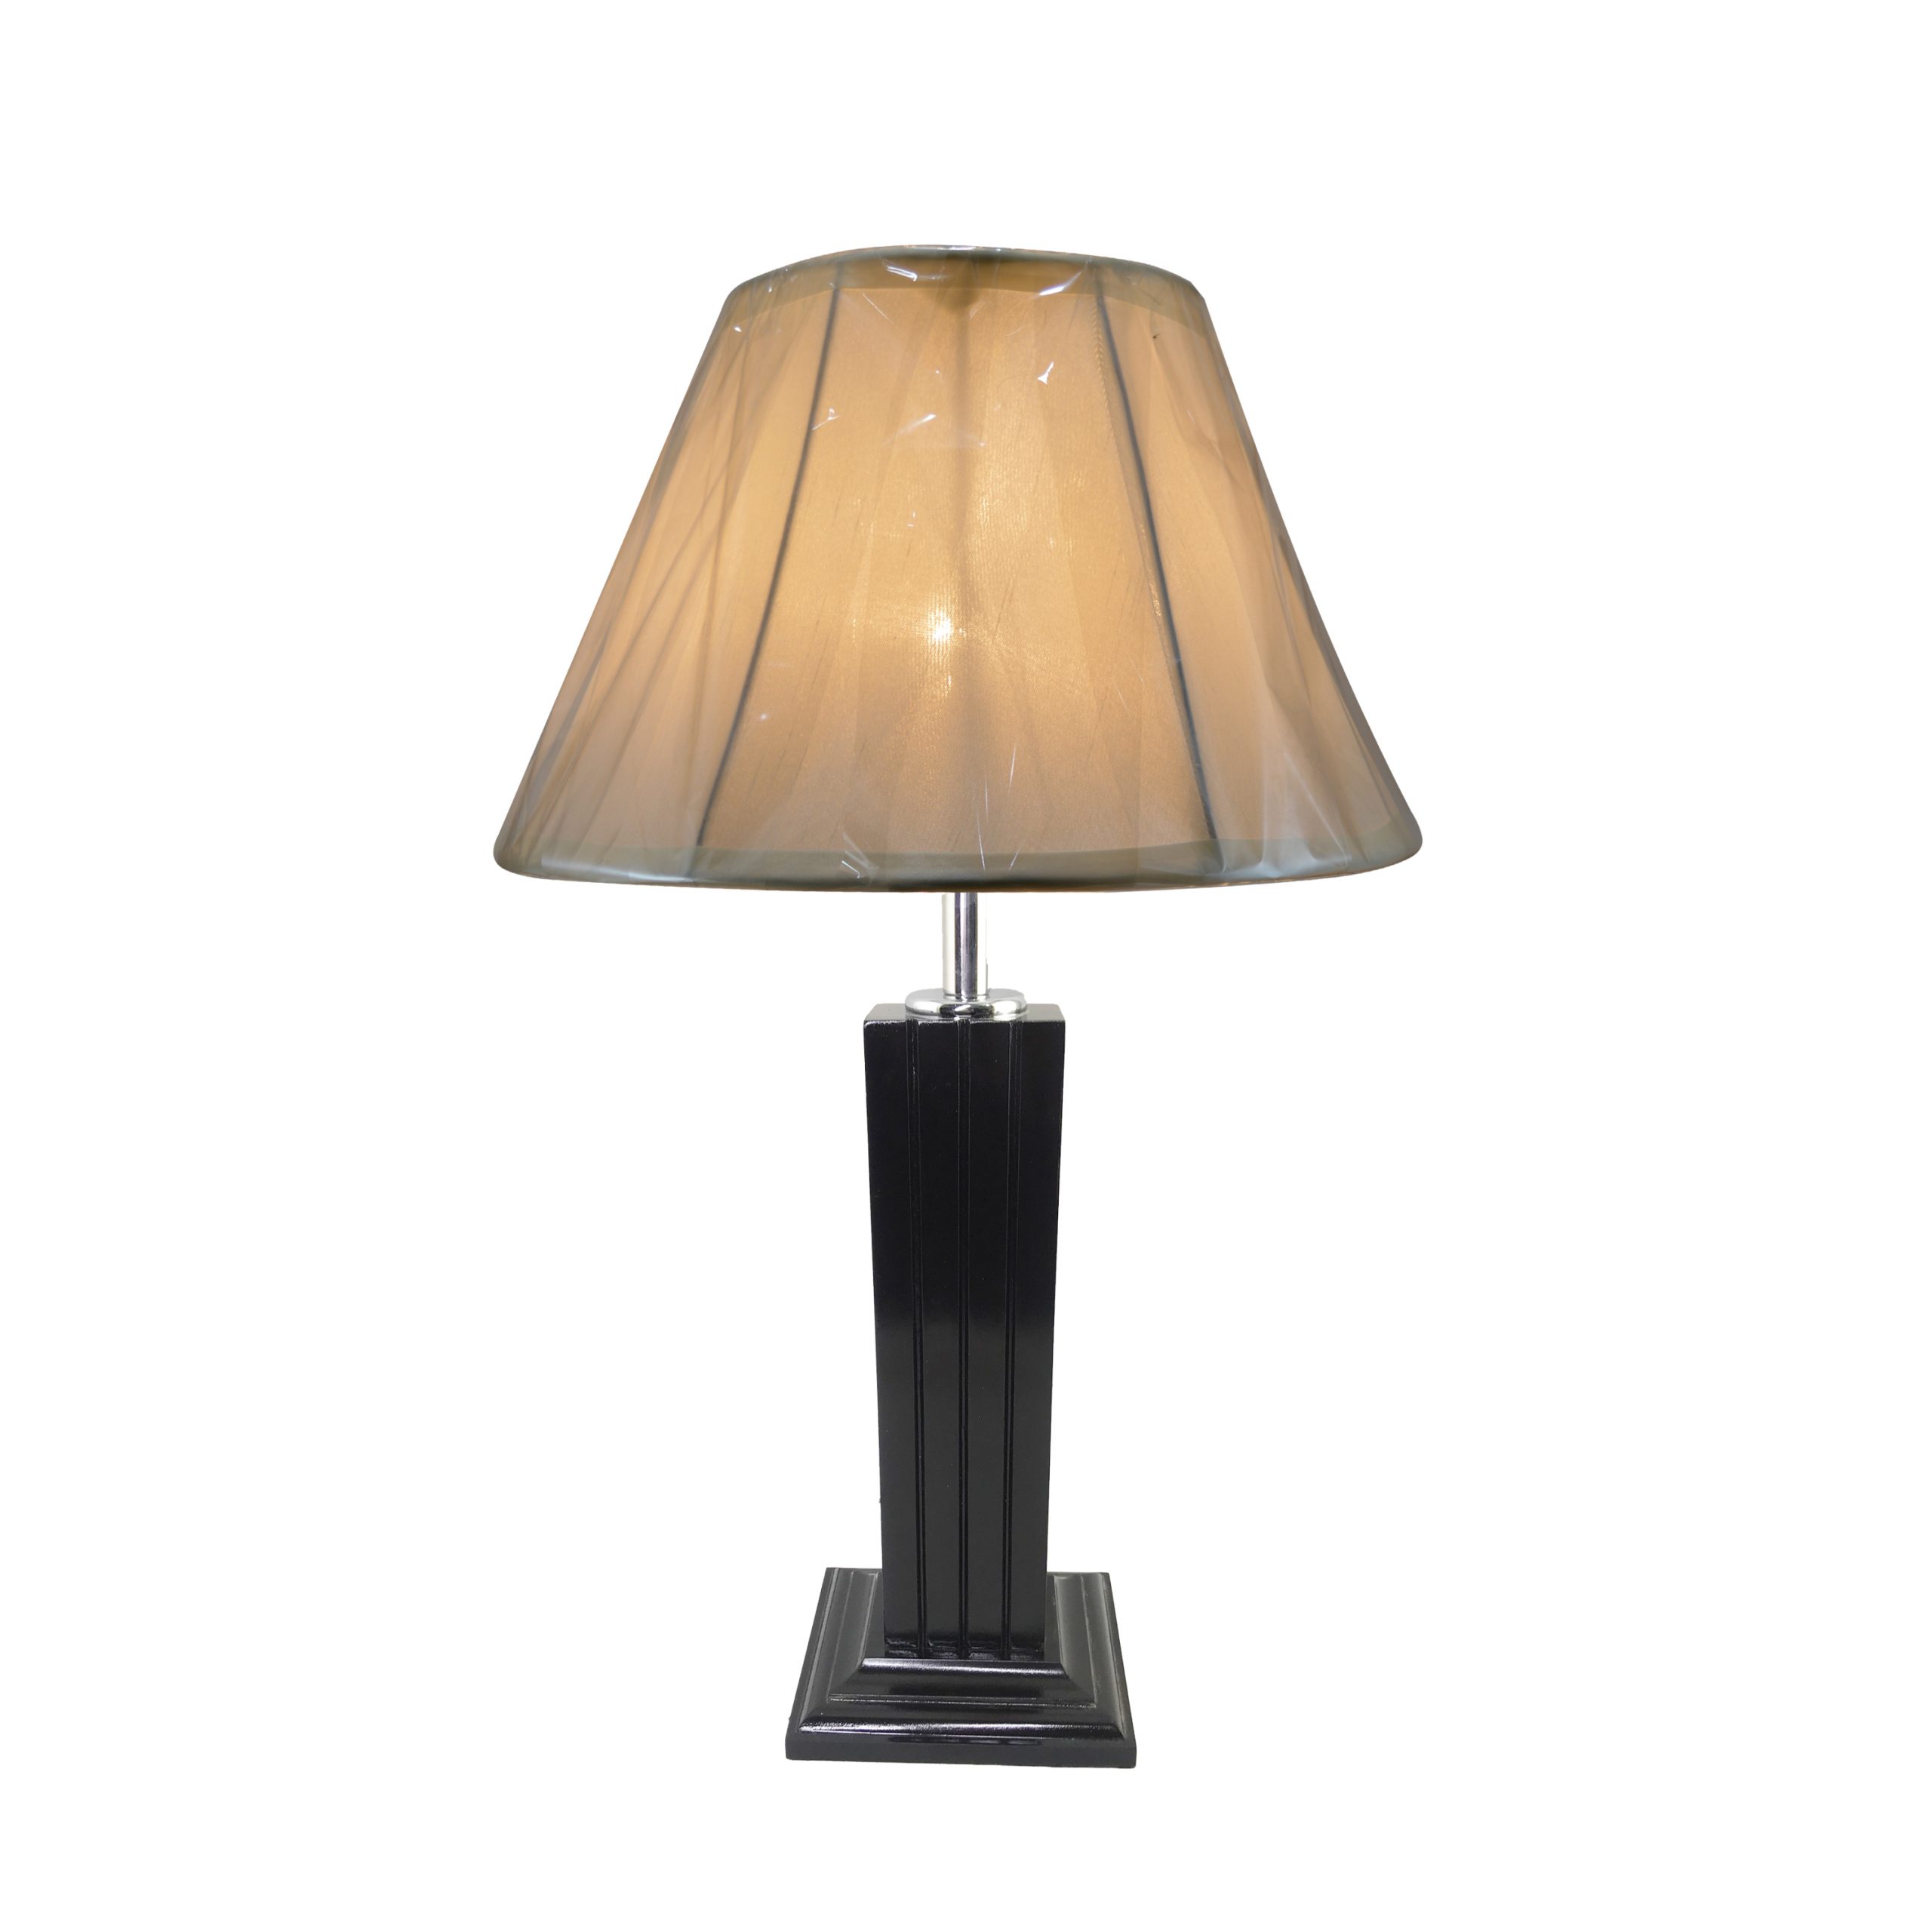 Lamp-5-4-scaled-1.jpg